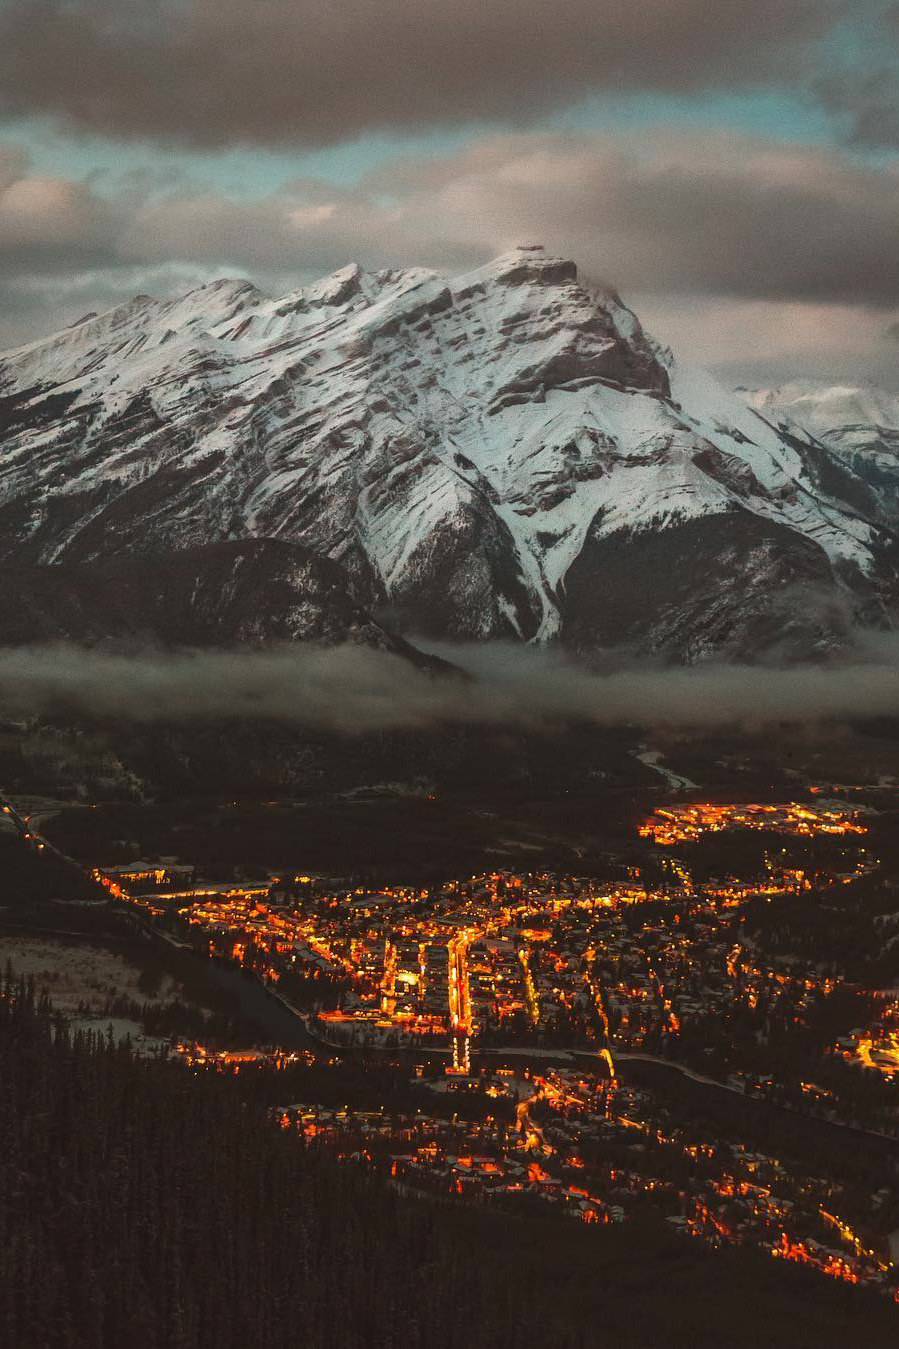 lsleofskye:Banff, Alberta